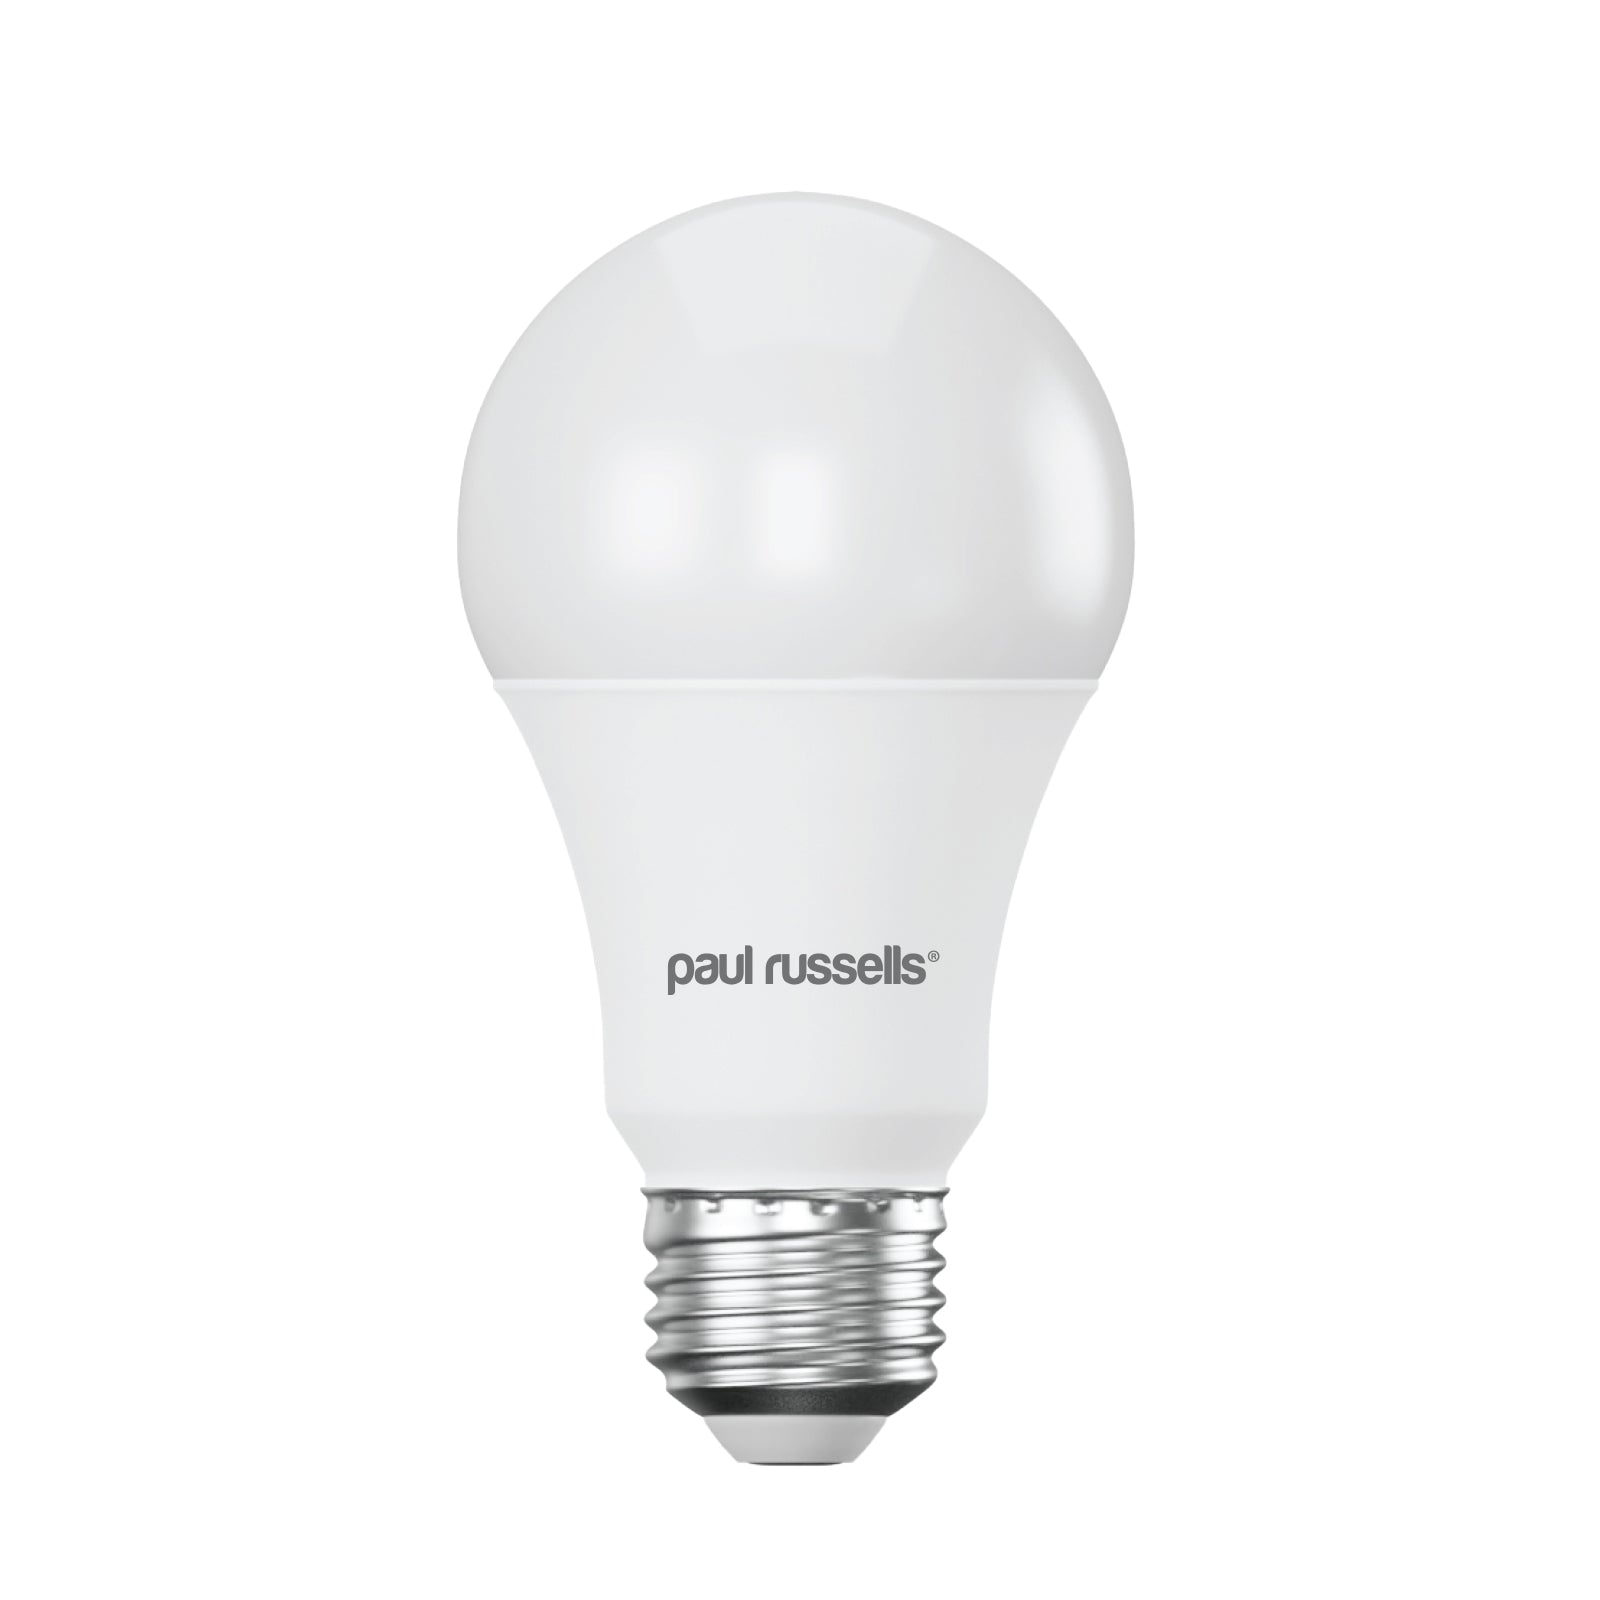 LED GLS 11W=75W Cool White Edison Screw ES E27 Light Bulbs